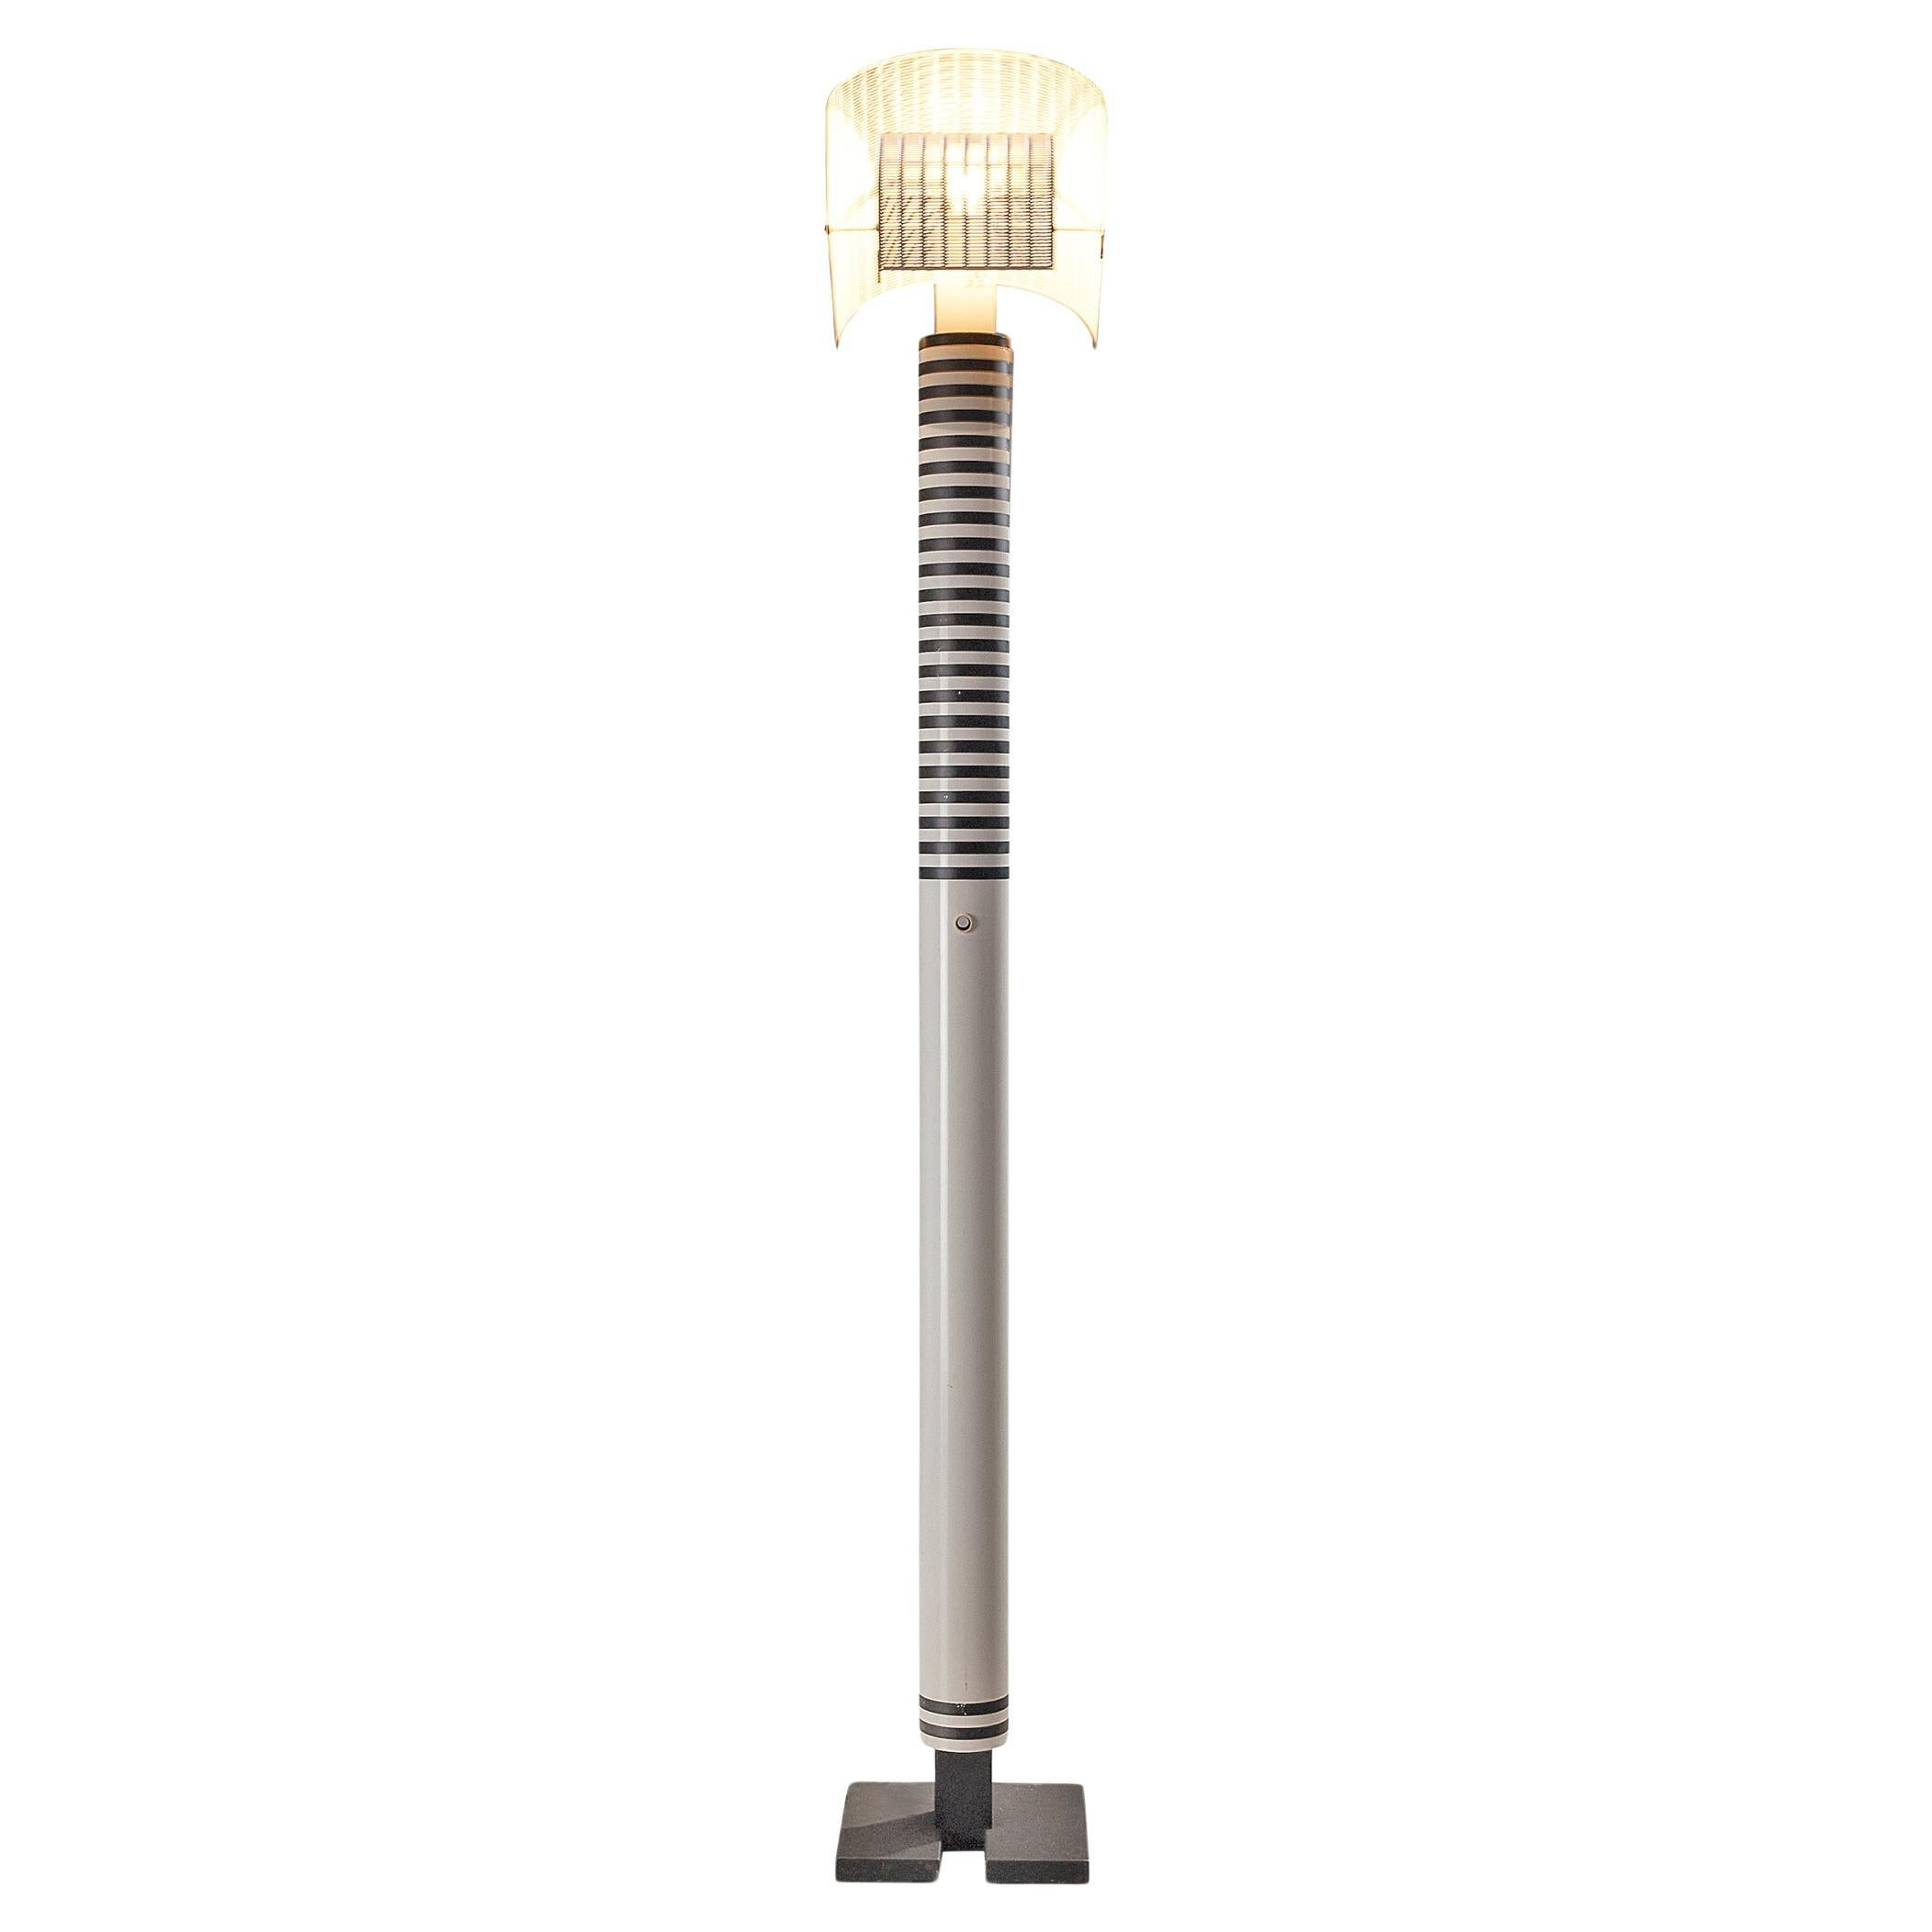 Mario Botta for Artemide ‘Shogun’ Floor Lamp 